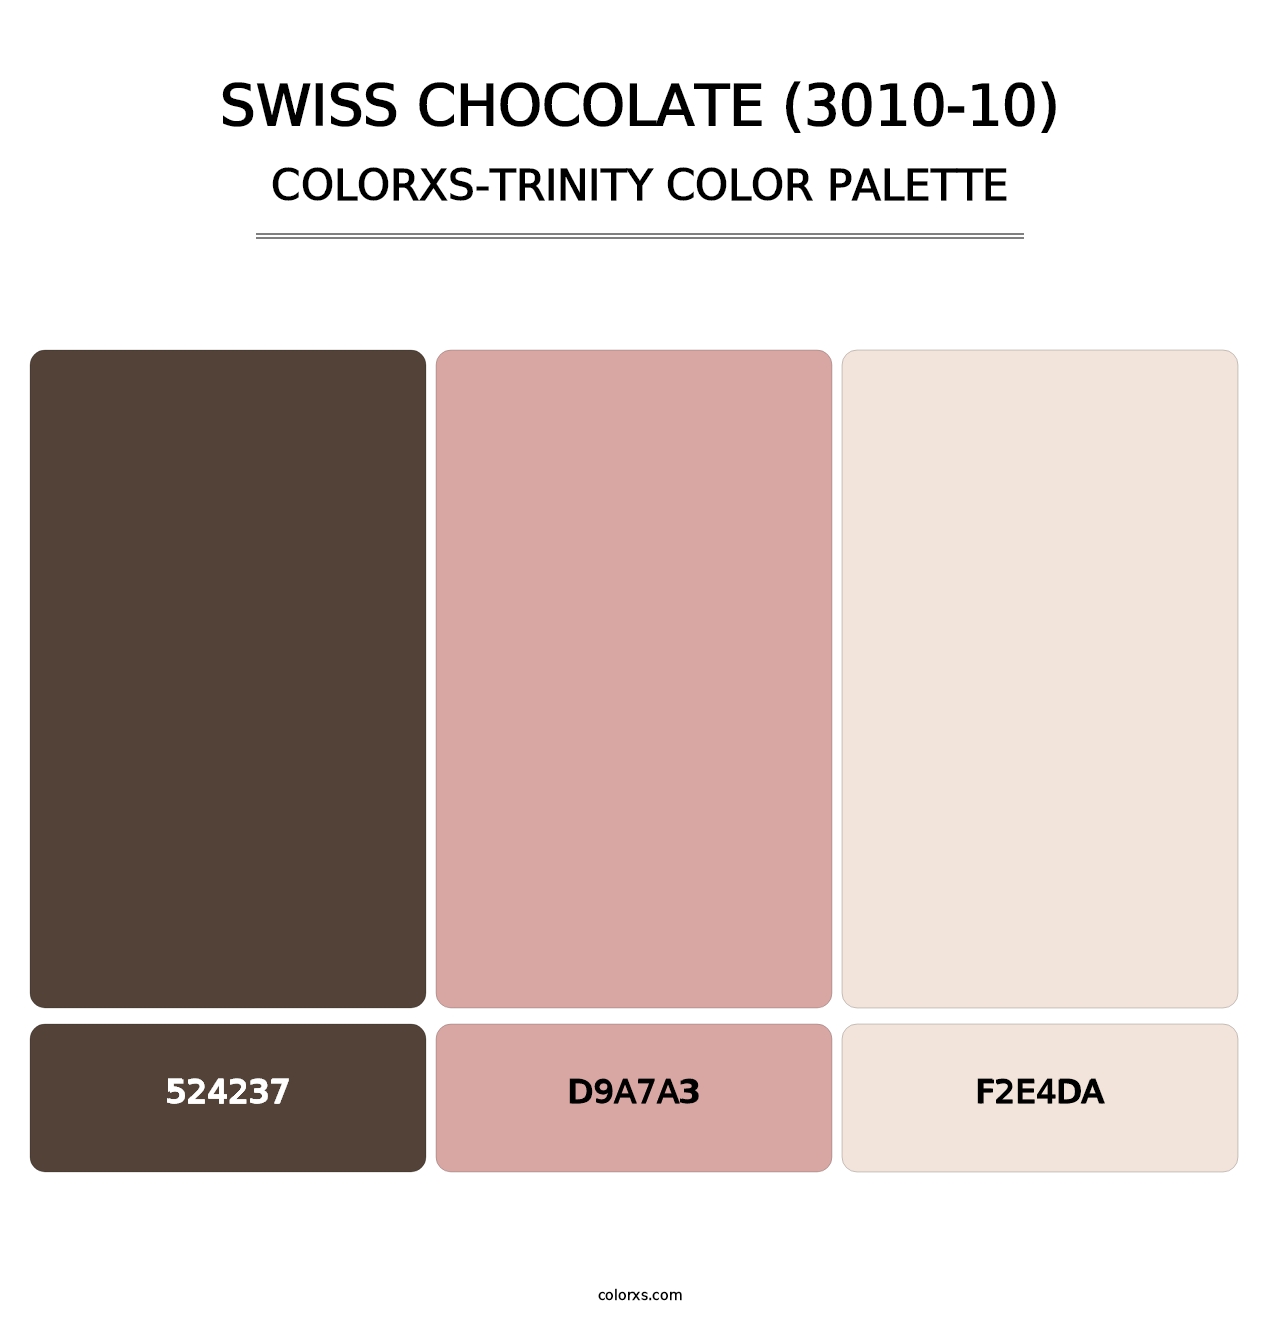 Swiss Chocolate (3010-10) - Colorxs Trinity Palette